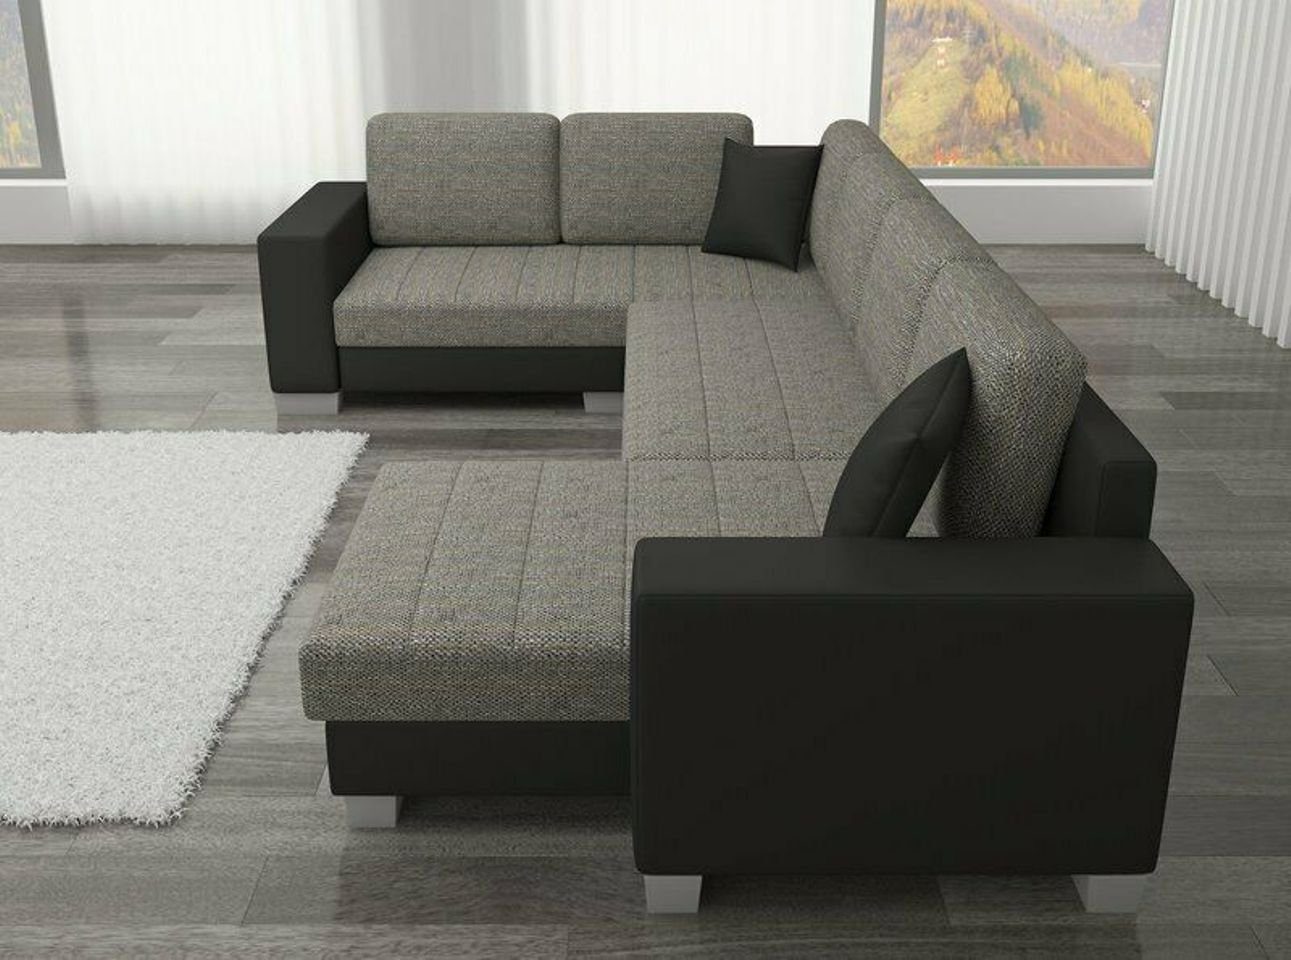 JVmoebel Ecksofa Design Ecksofa Sofa Schlafsofa Bettfunktion Couch Polster Textil, Mit Bettfunktion Dunkelgrau / Schwarz